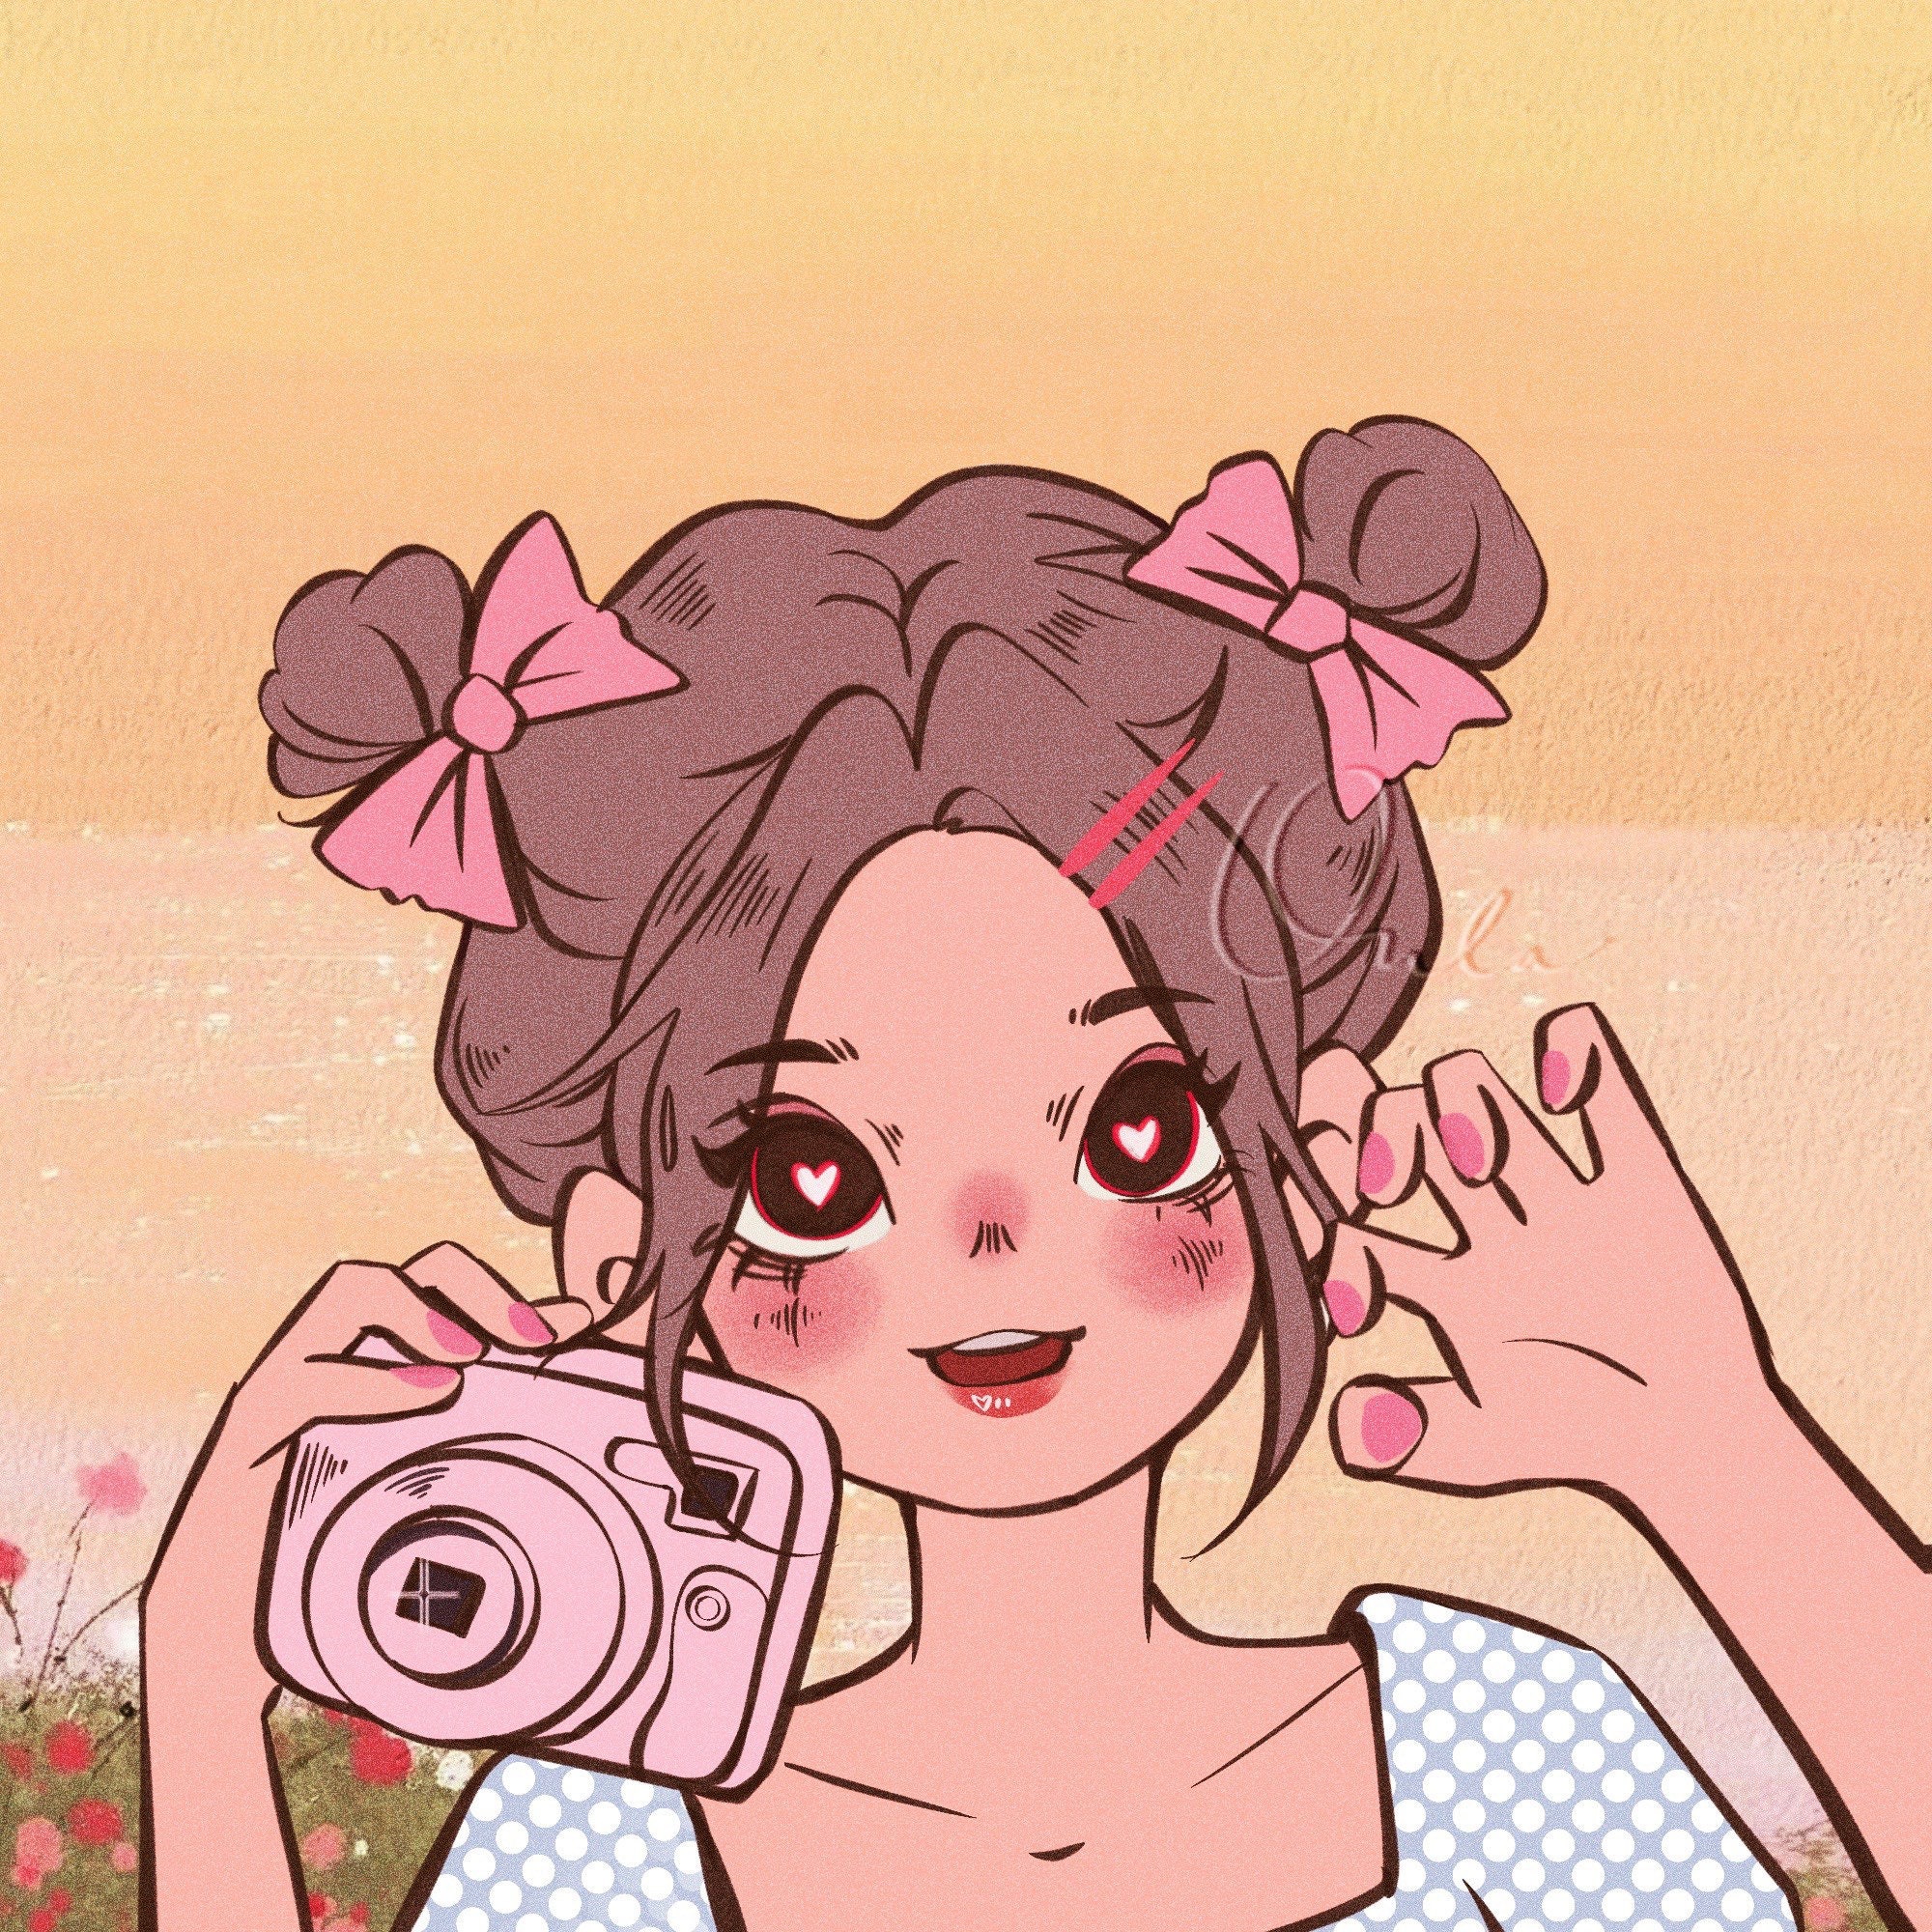 🅽🅸🆂🅷🅰🅽🆃 on Instagram: DM for paid promotion 💸 . . . . #profilepic # profile #anime #edit #digitalart #cute #animepfp #drawing #love  #cutecartoon #post #cartoonnetwork #dp #boysdp #girlsdp #dppic  #profilepicture #explorepage #picture #leerandgougu #